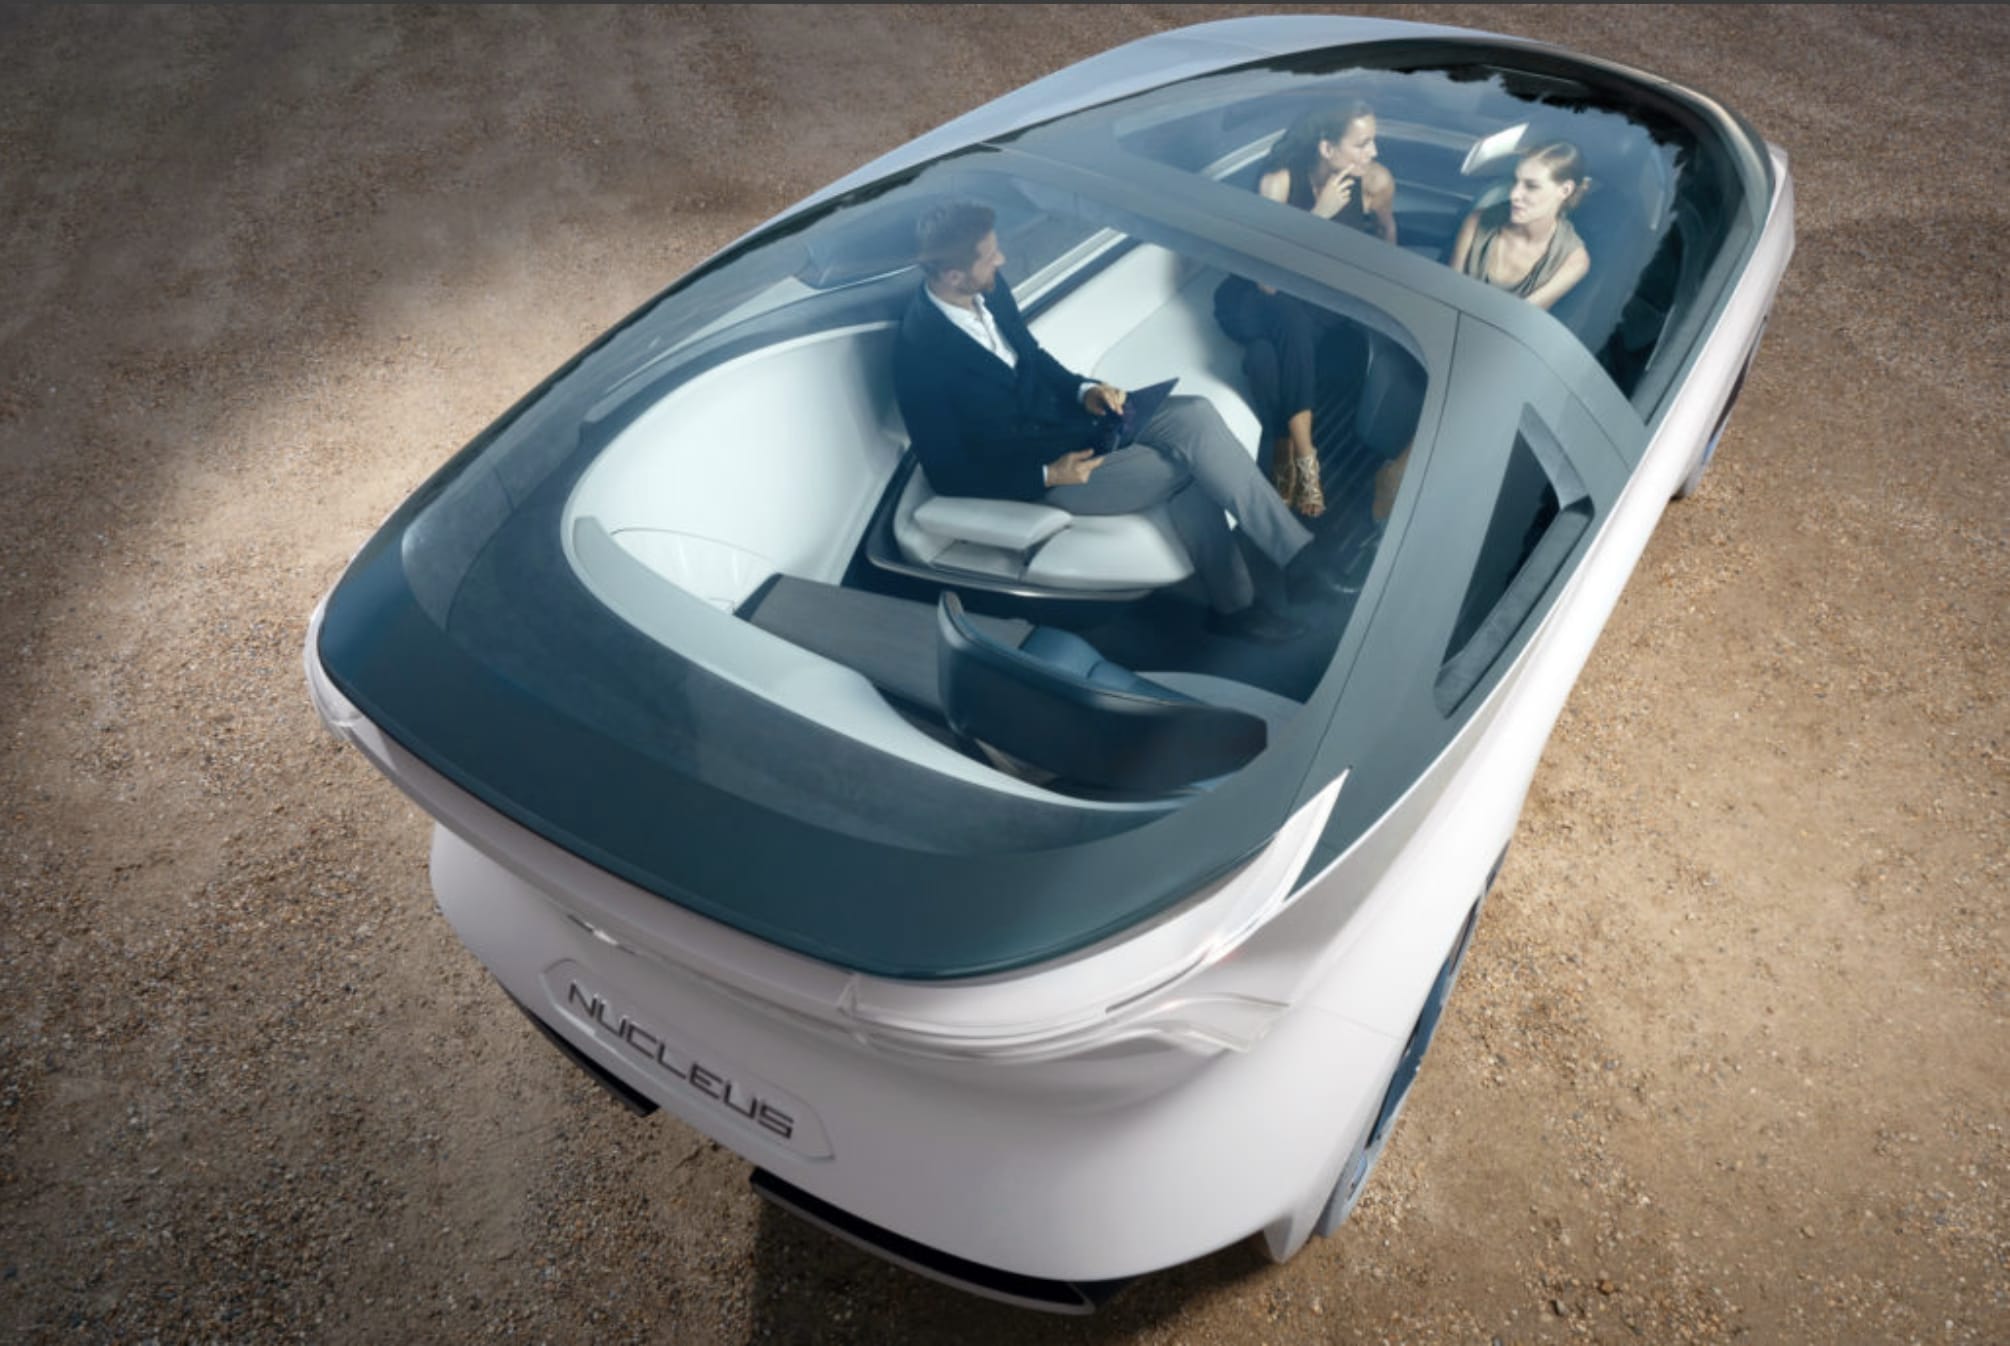 A sneak peek at the interior of the Icona Nucleus concept electric vehicle. (Photo courtesy: Icona Design)